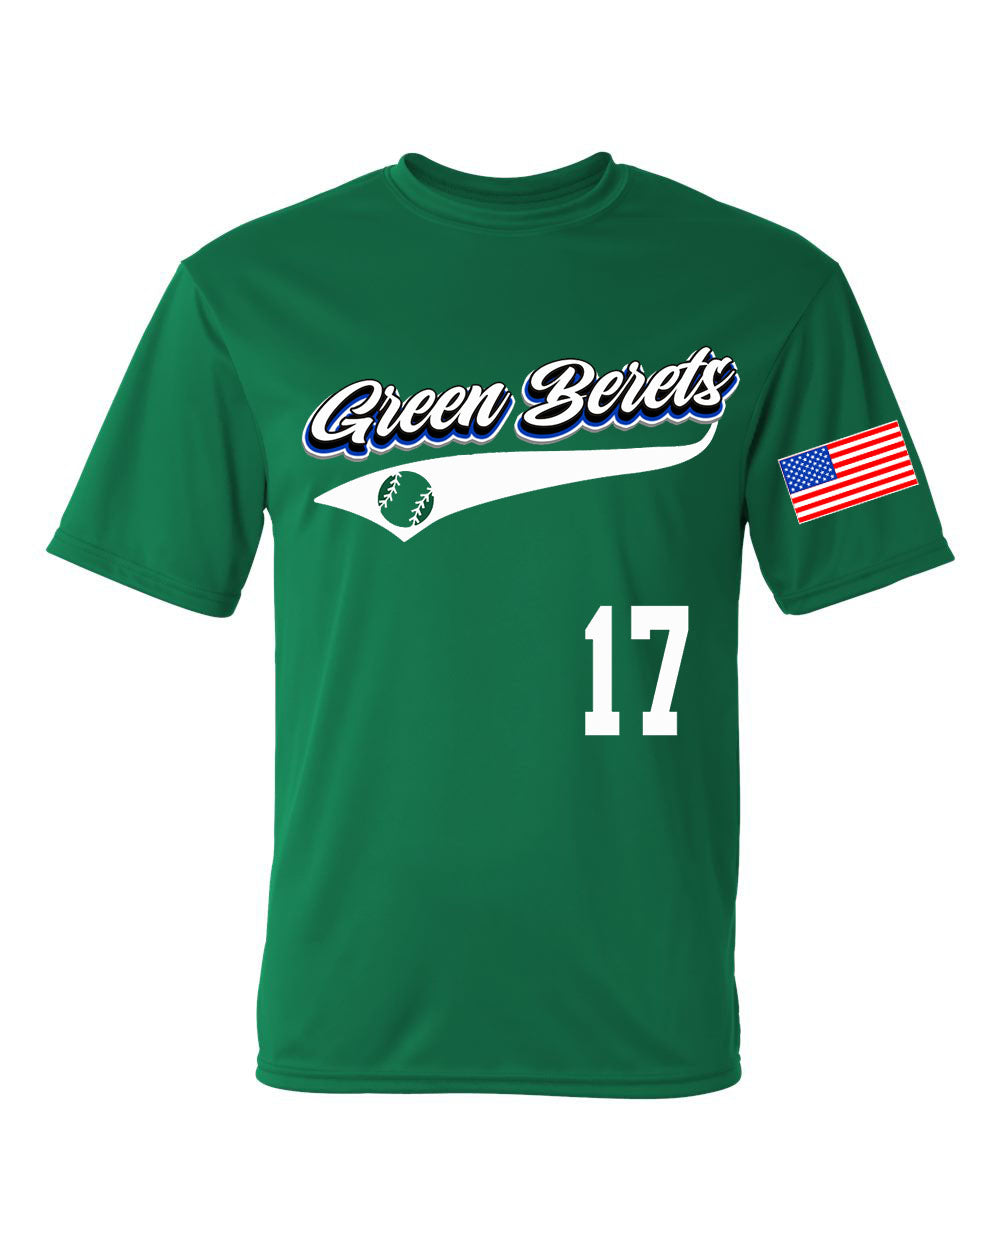 Baseball Uniform Performance Material T-Shirt